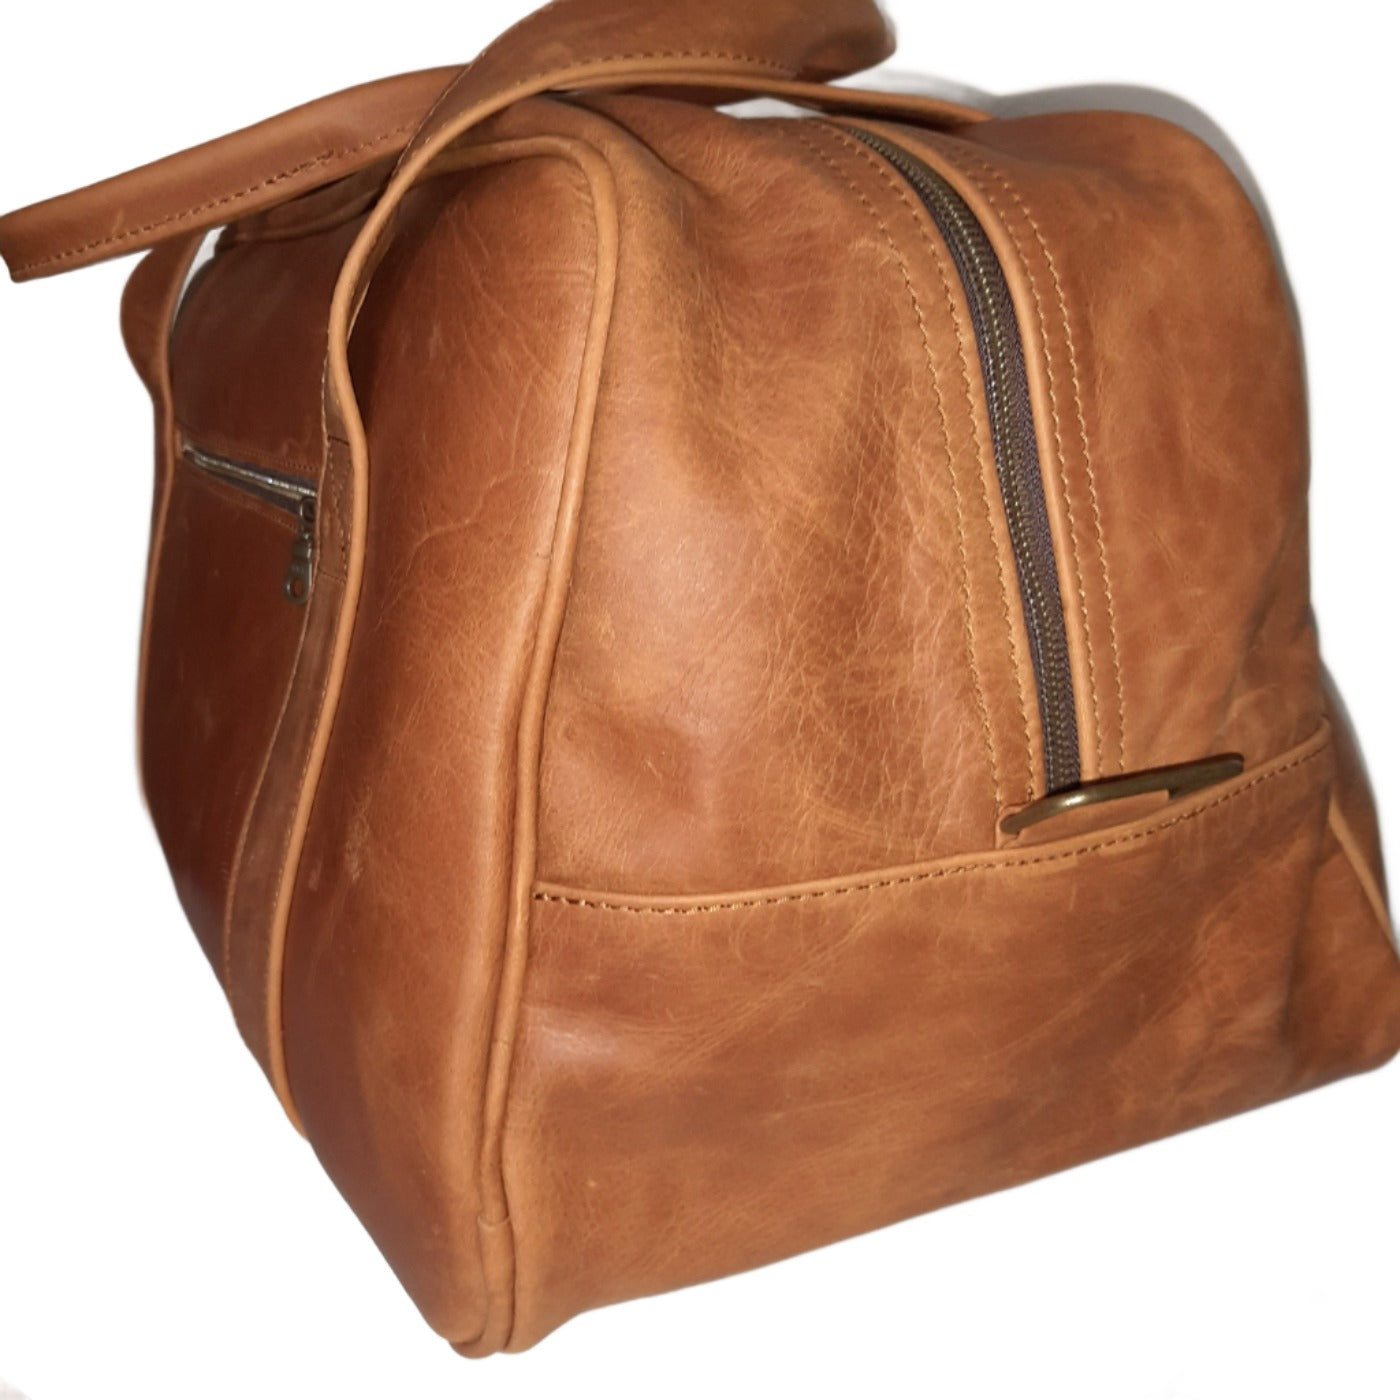 Cape Executive Traveler Bag  in toffee tan - Cape Masai Leather 